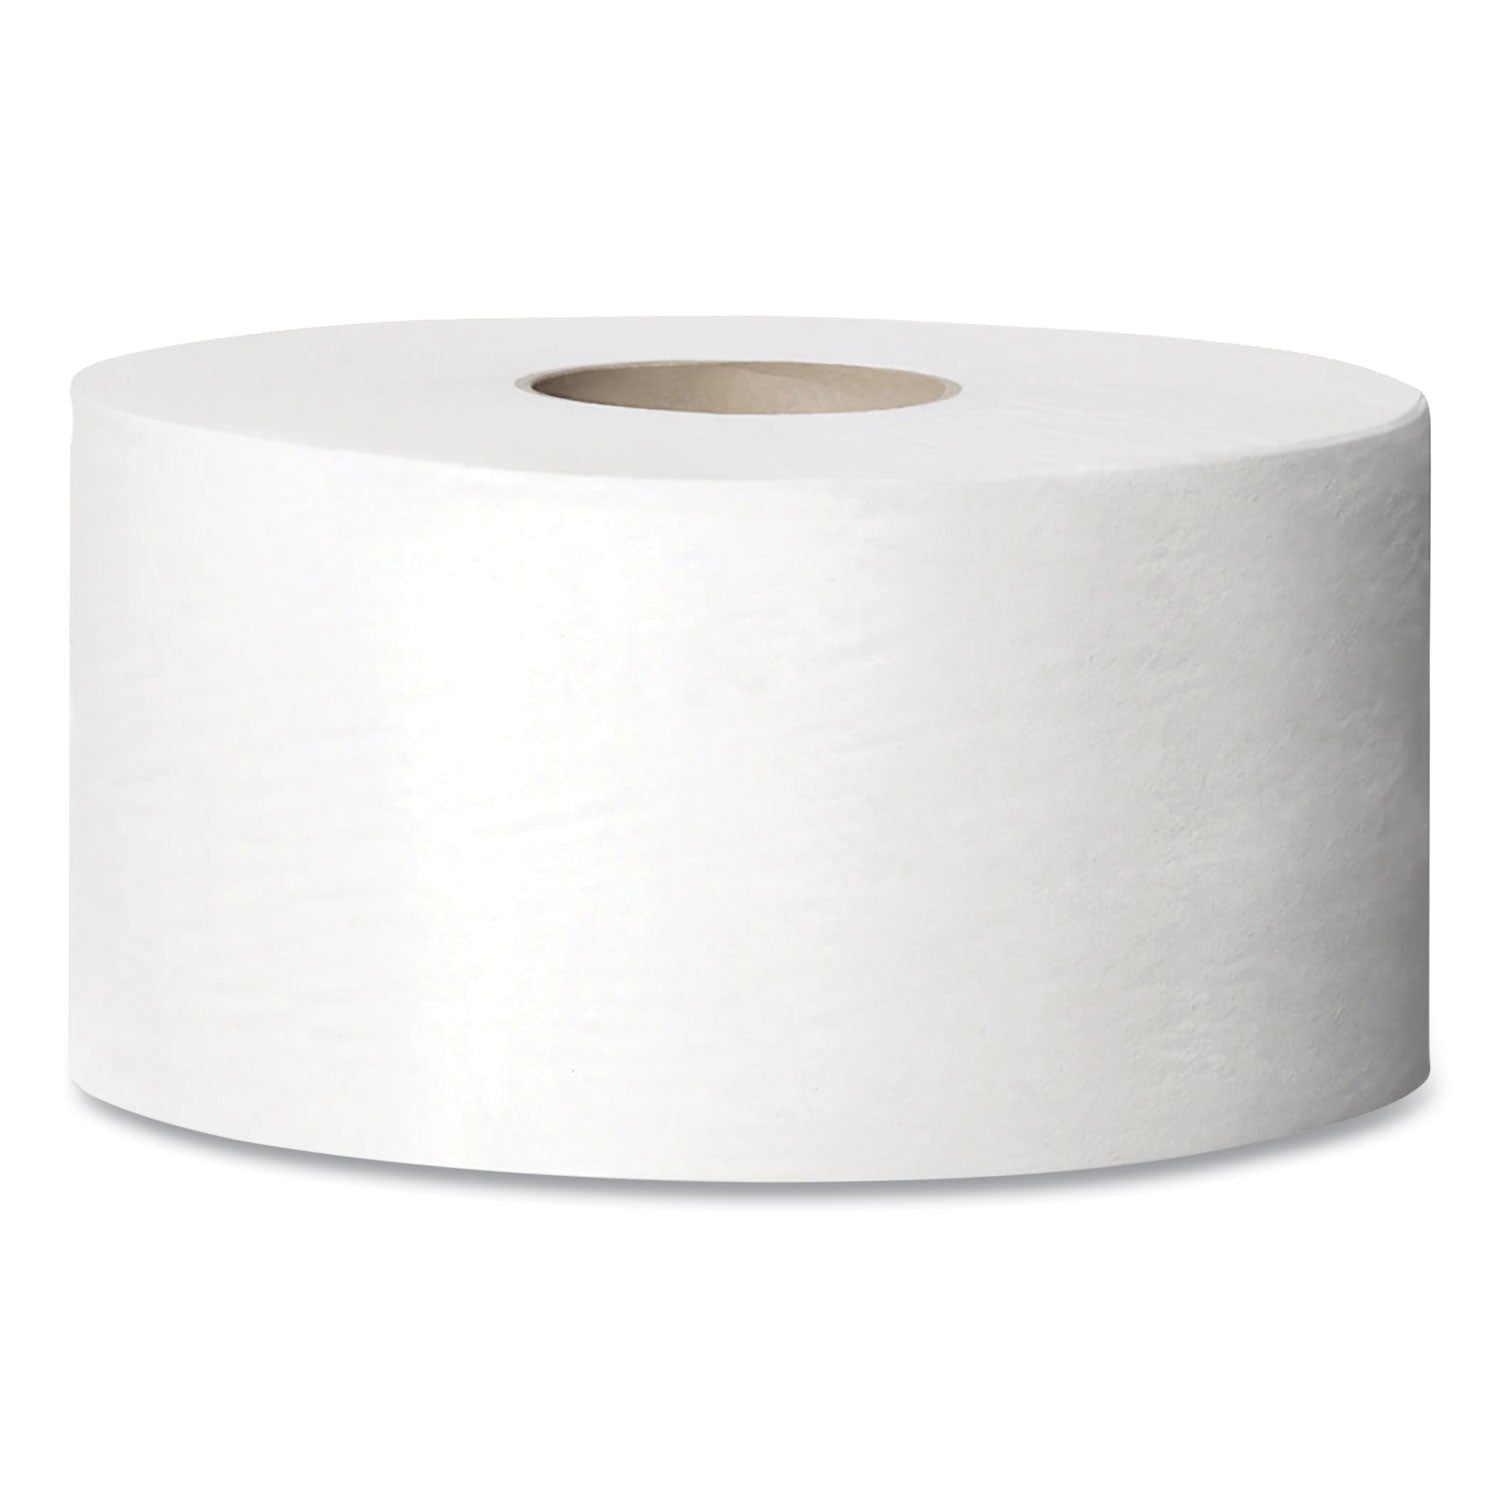 advanced-jumbo-bath-tissue-septic-safe-1-ply-white-348-x-1200-ft-12-rolls-carton_trk12013903 - 1